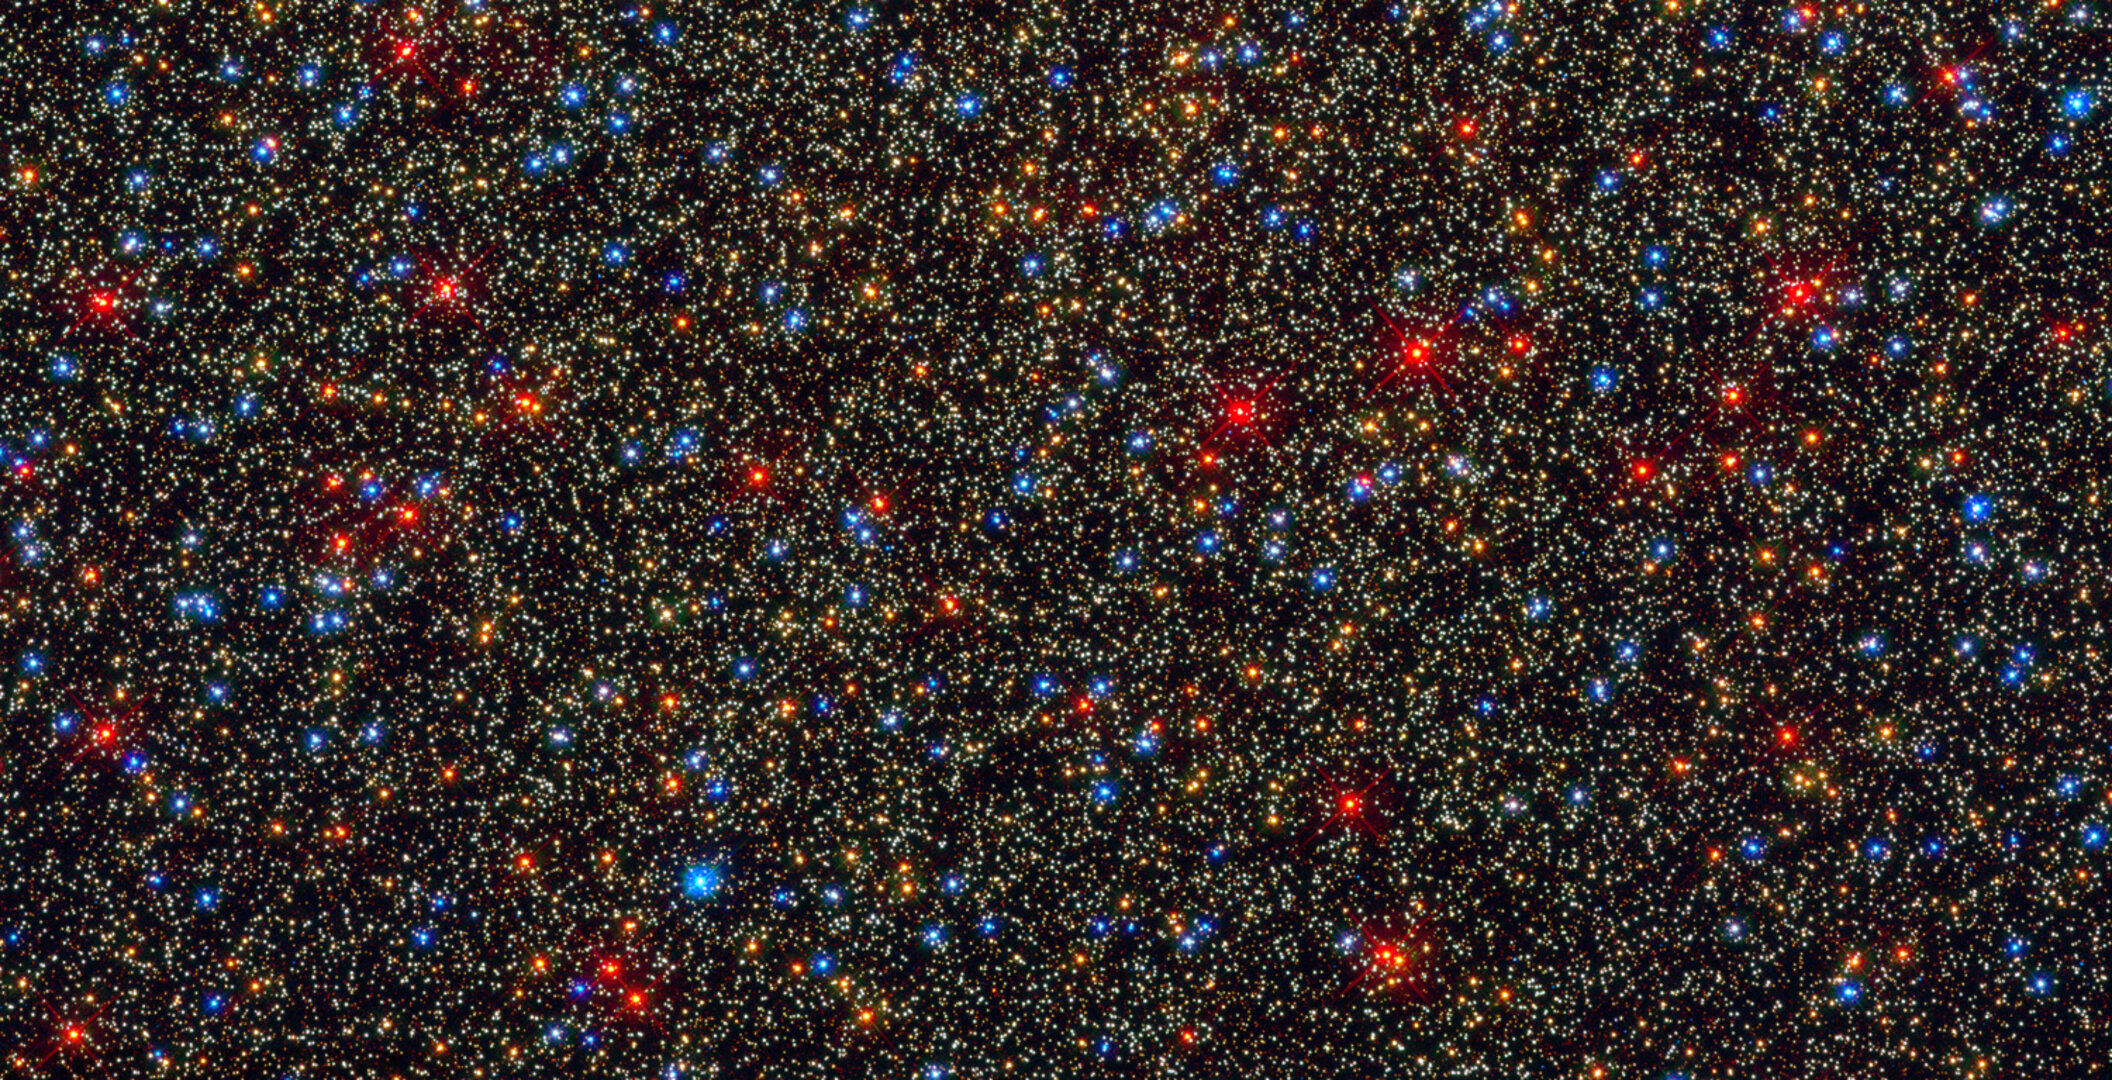 Hubble resolves myriad stars in dense star cluster